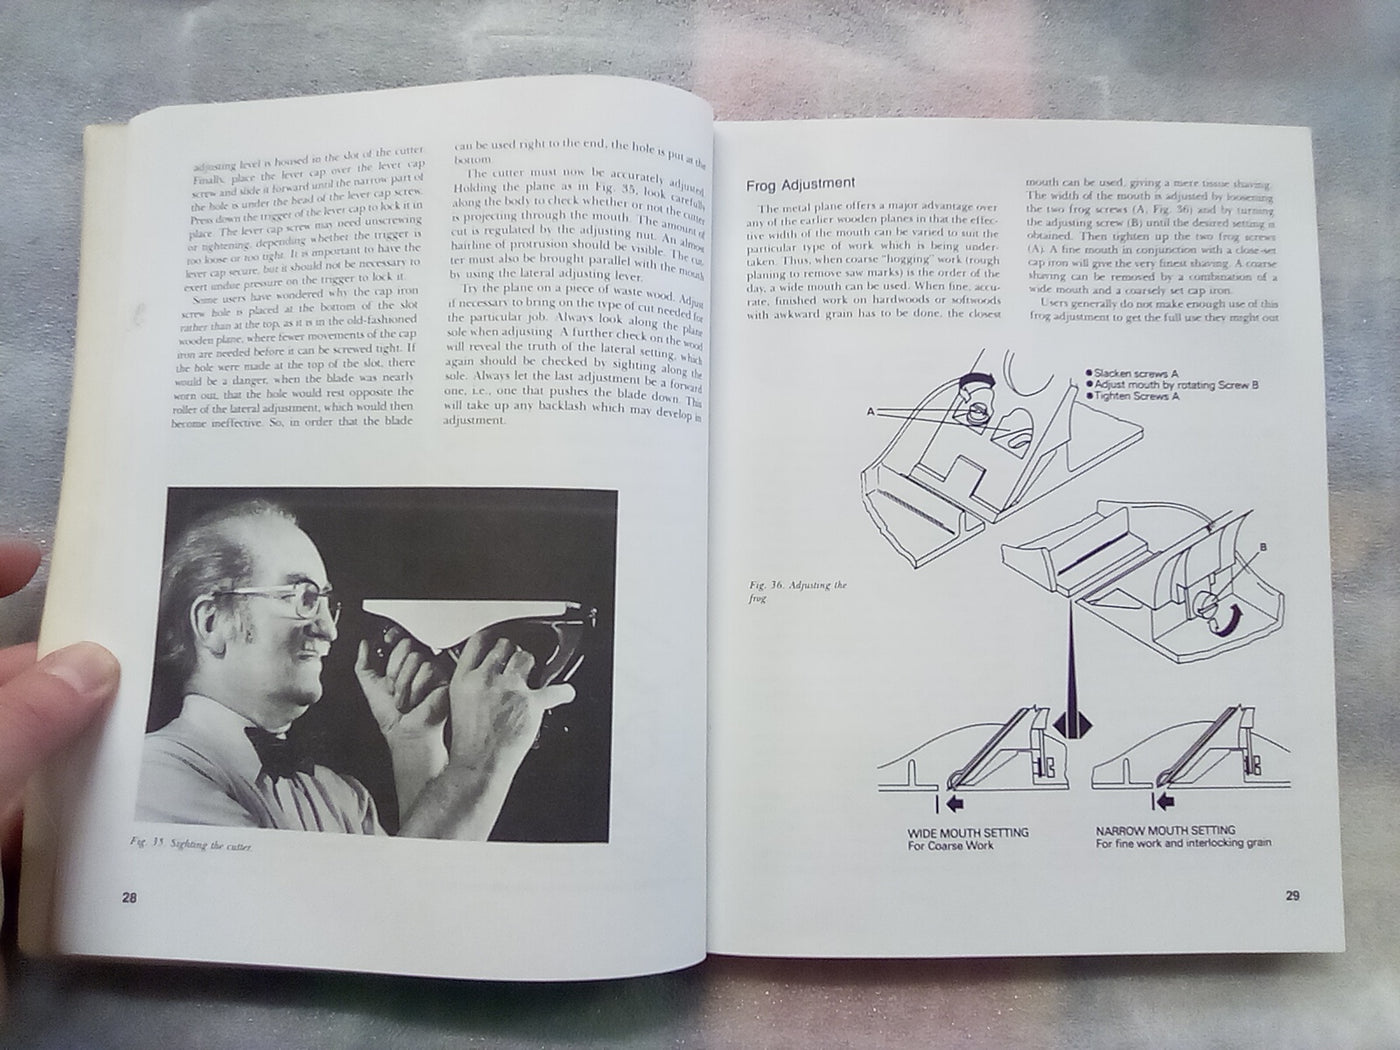 Planecraft - A Woodworkers Handbook by John Sainsbury